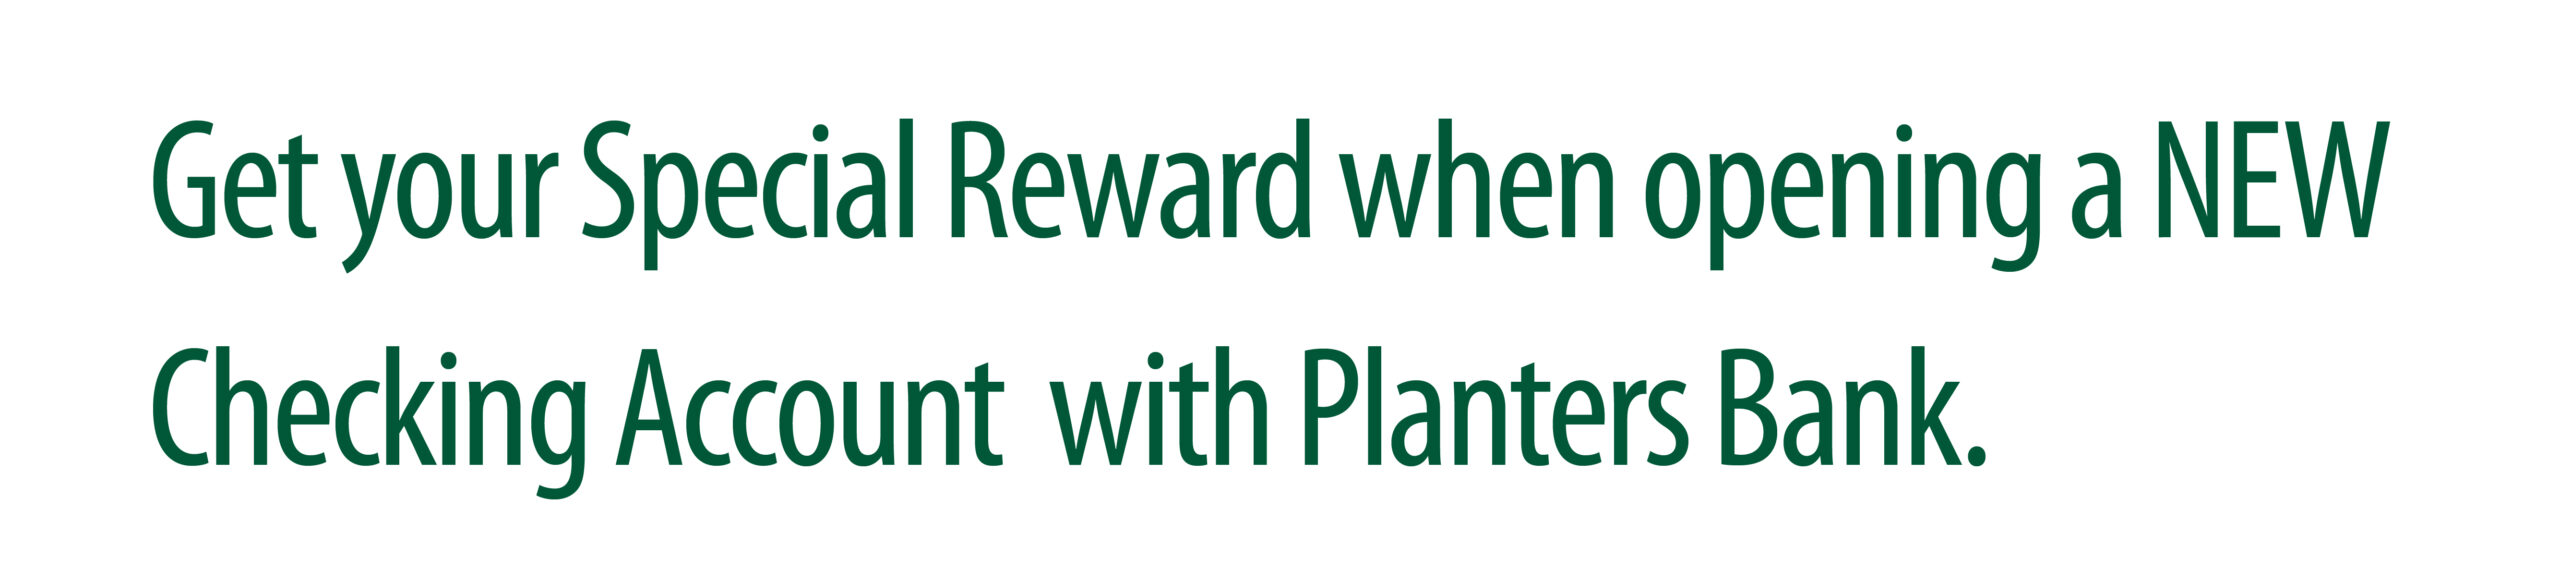 Planters_25_Yr_Landing_Page_Header-07